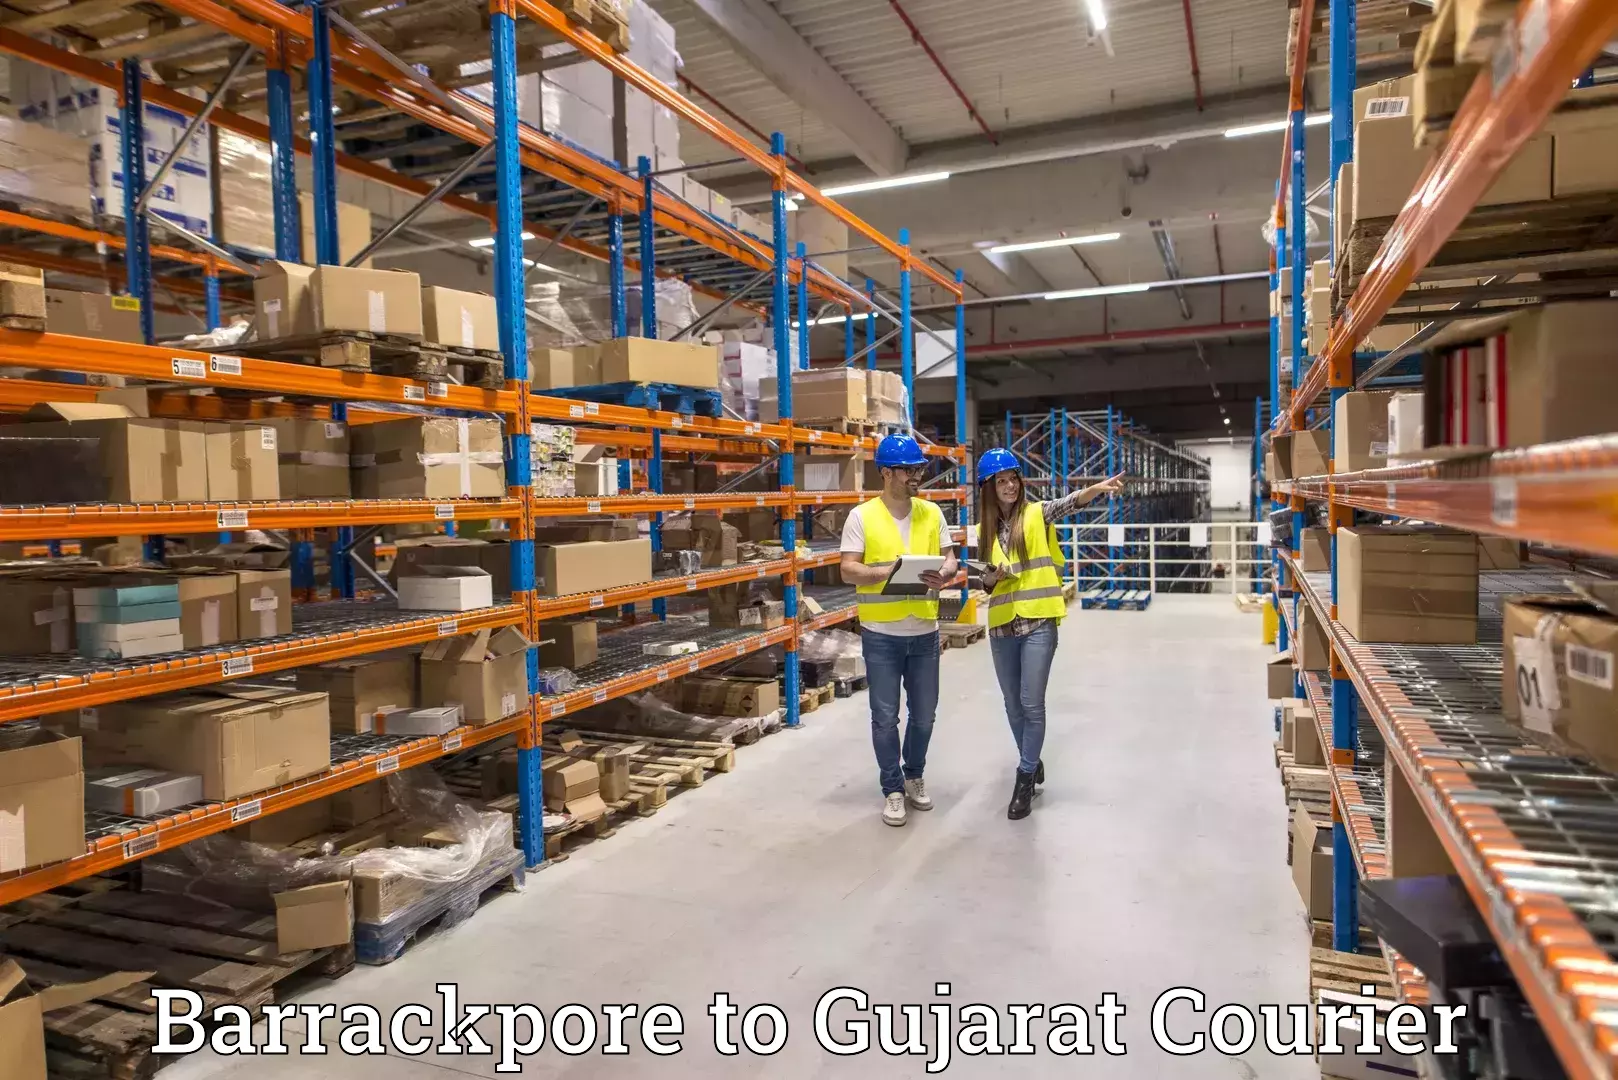 Logistics service provider Barrackpore to Dwarka